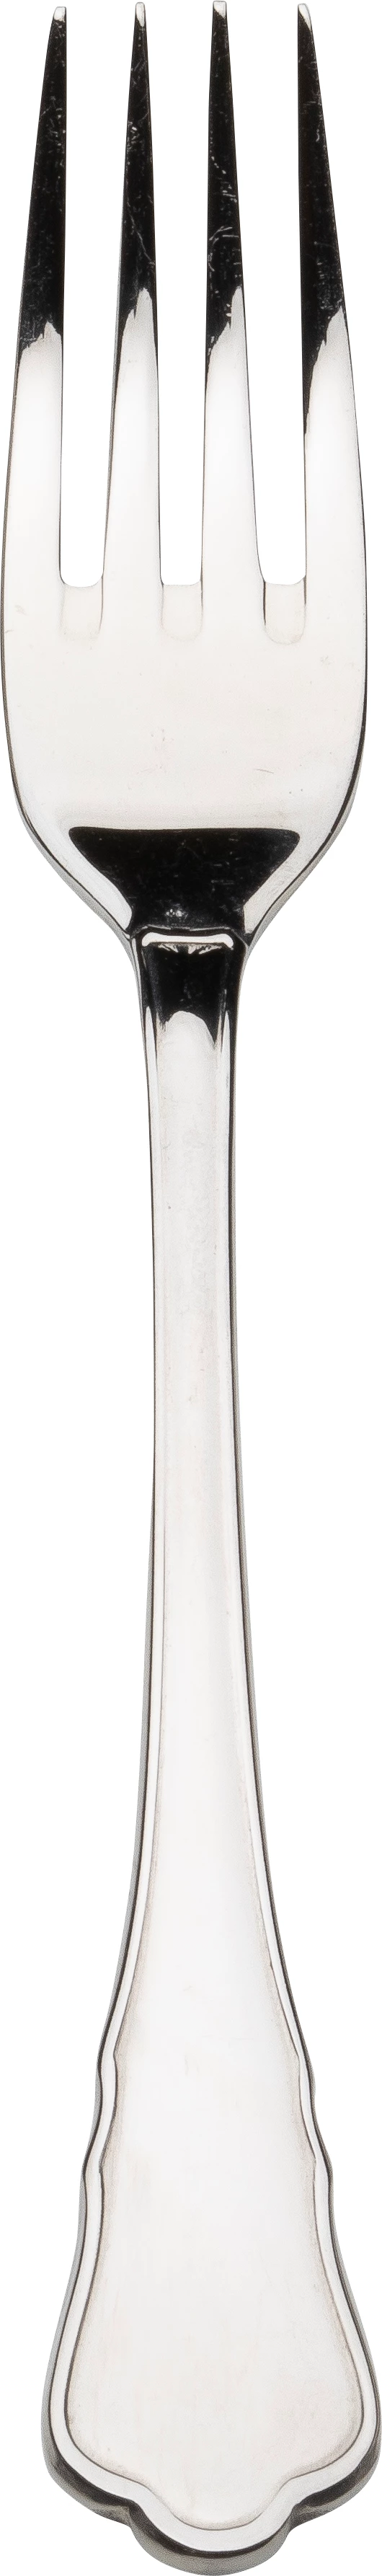 Royal Chippendale spisegaffel, 18,8 cm